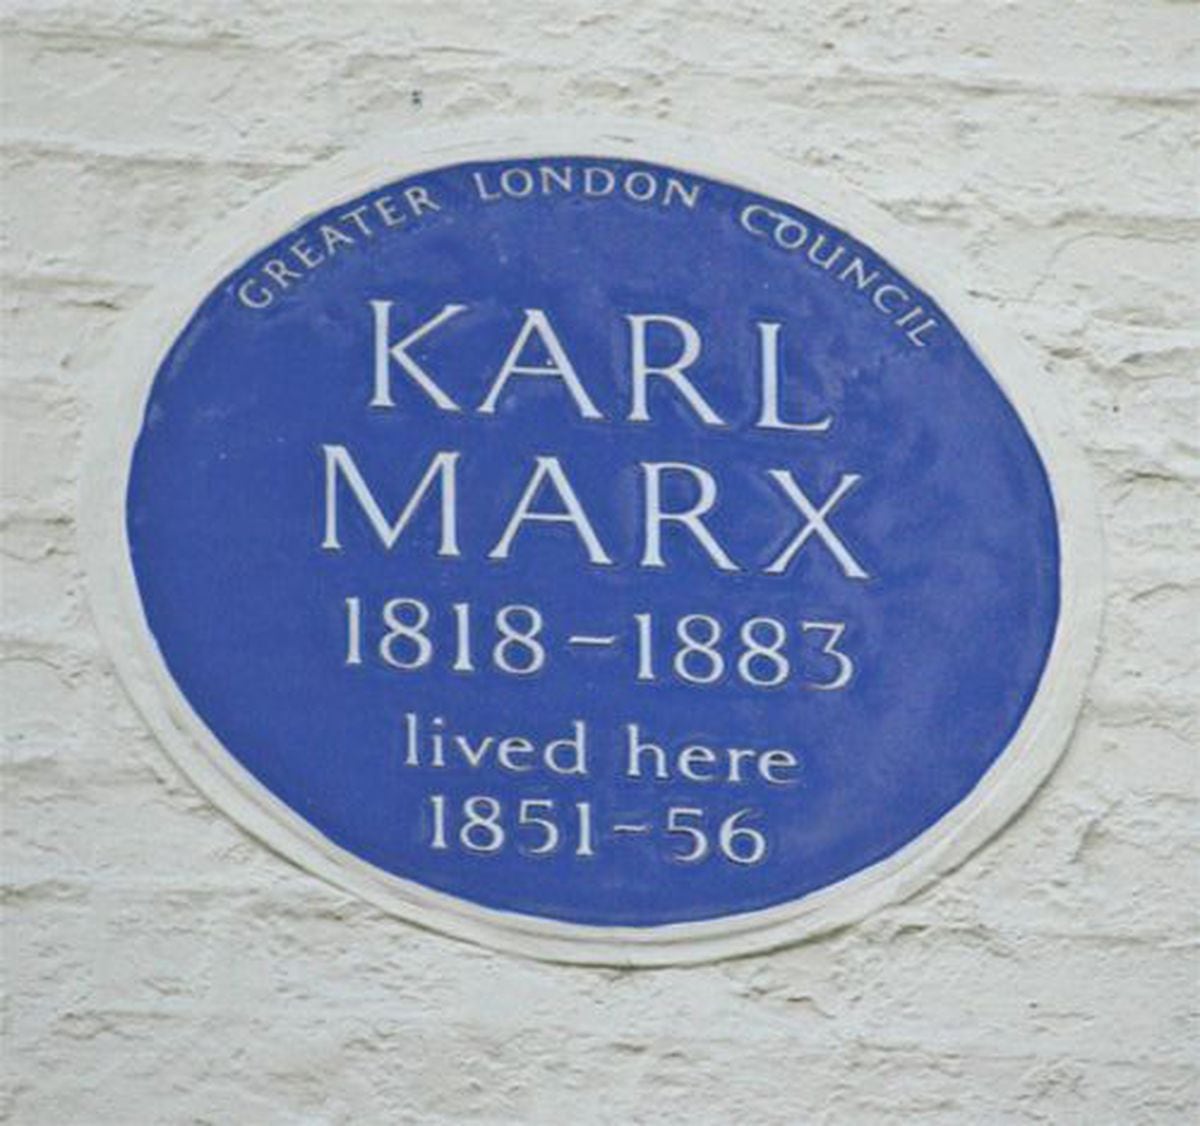 Karl Marx's plaque in London